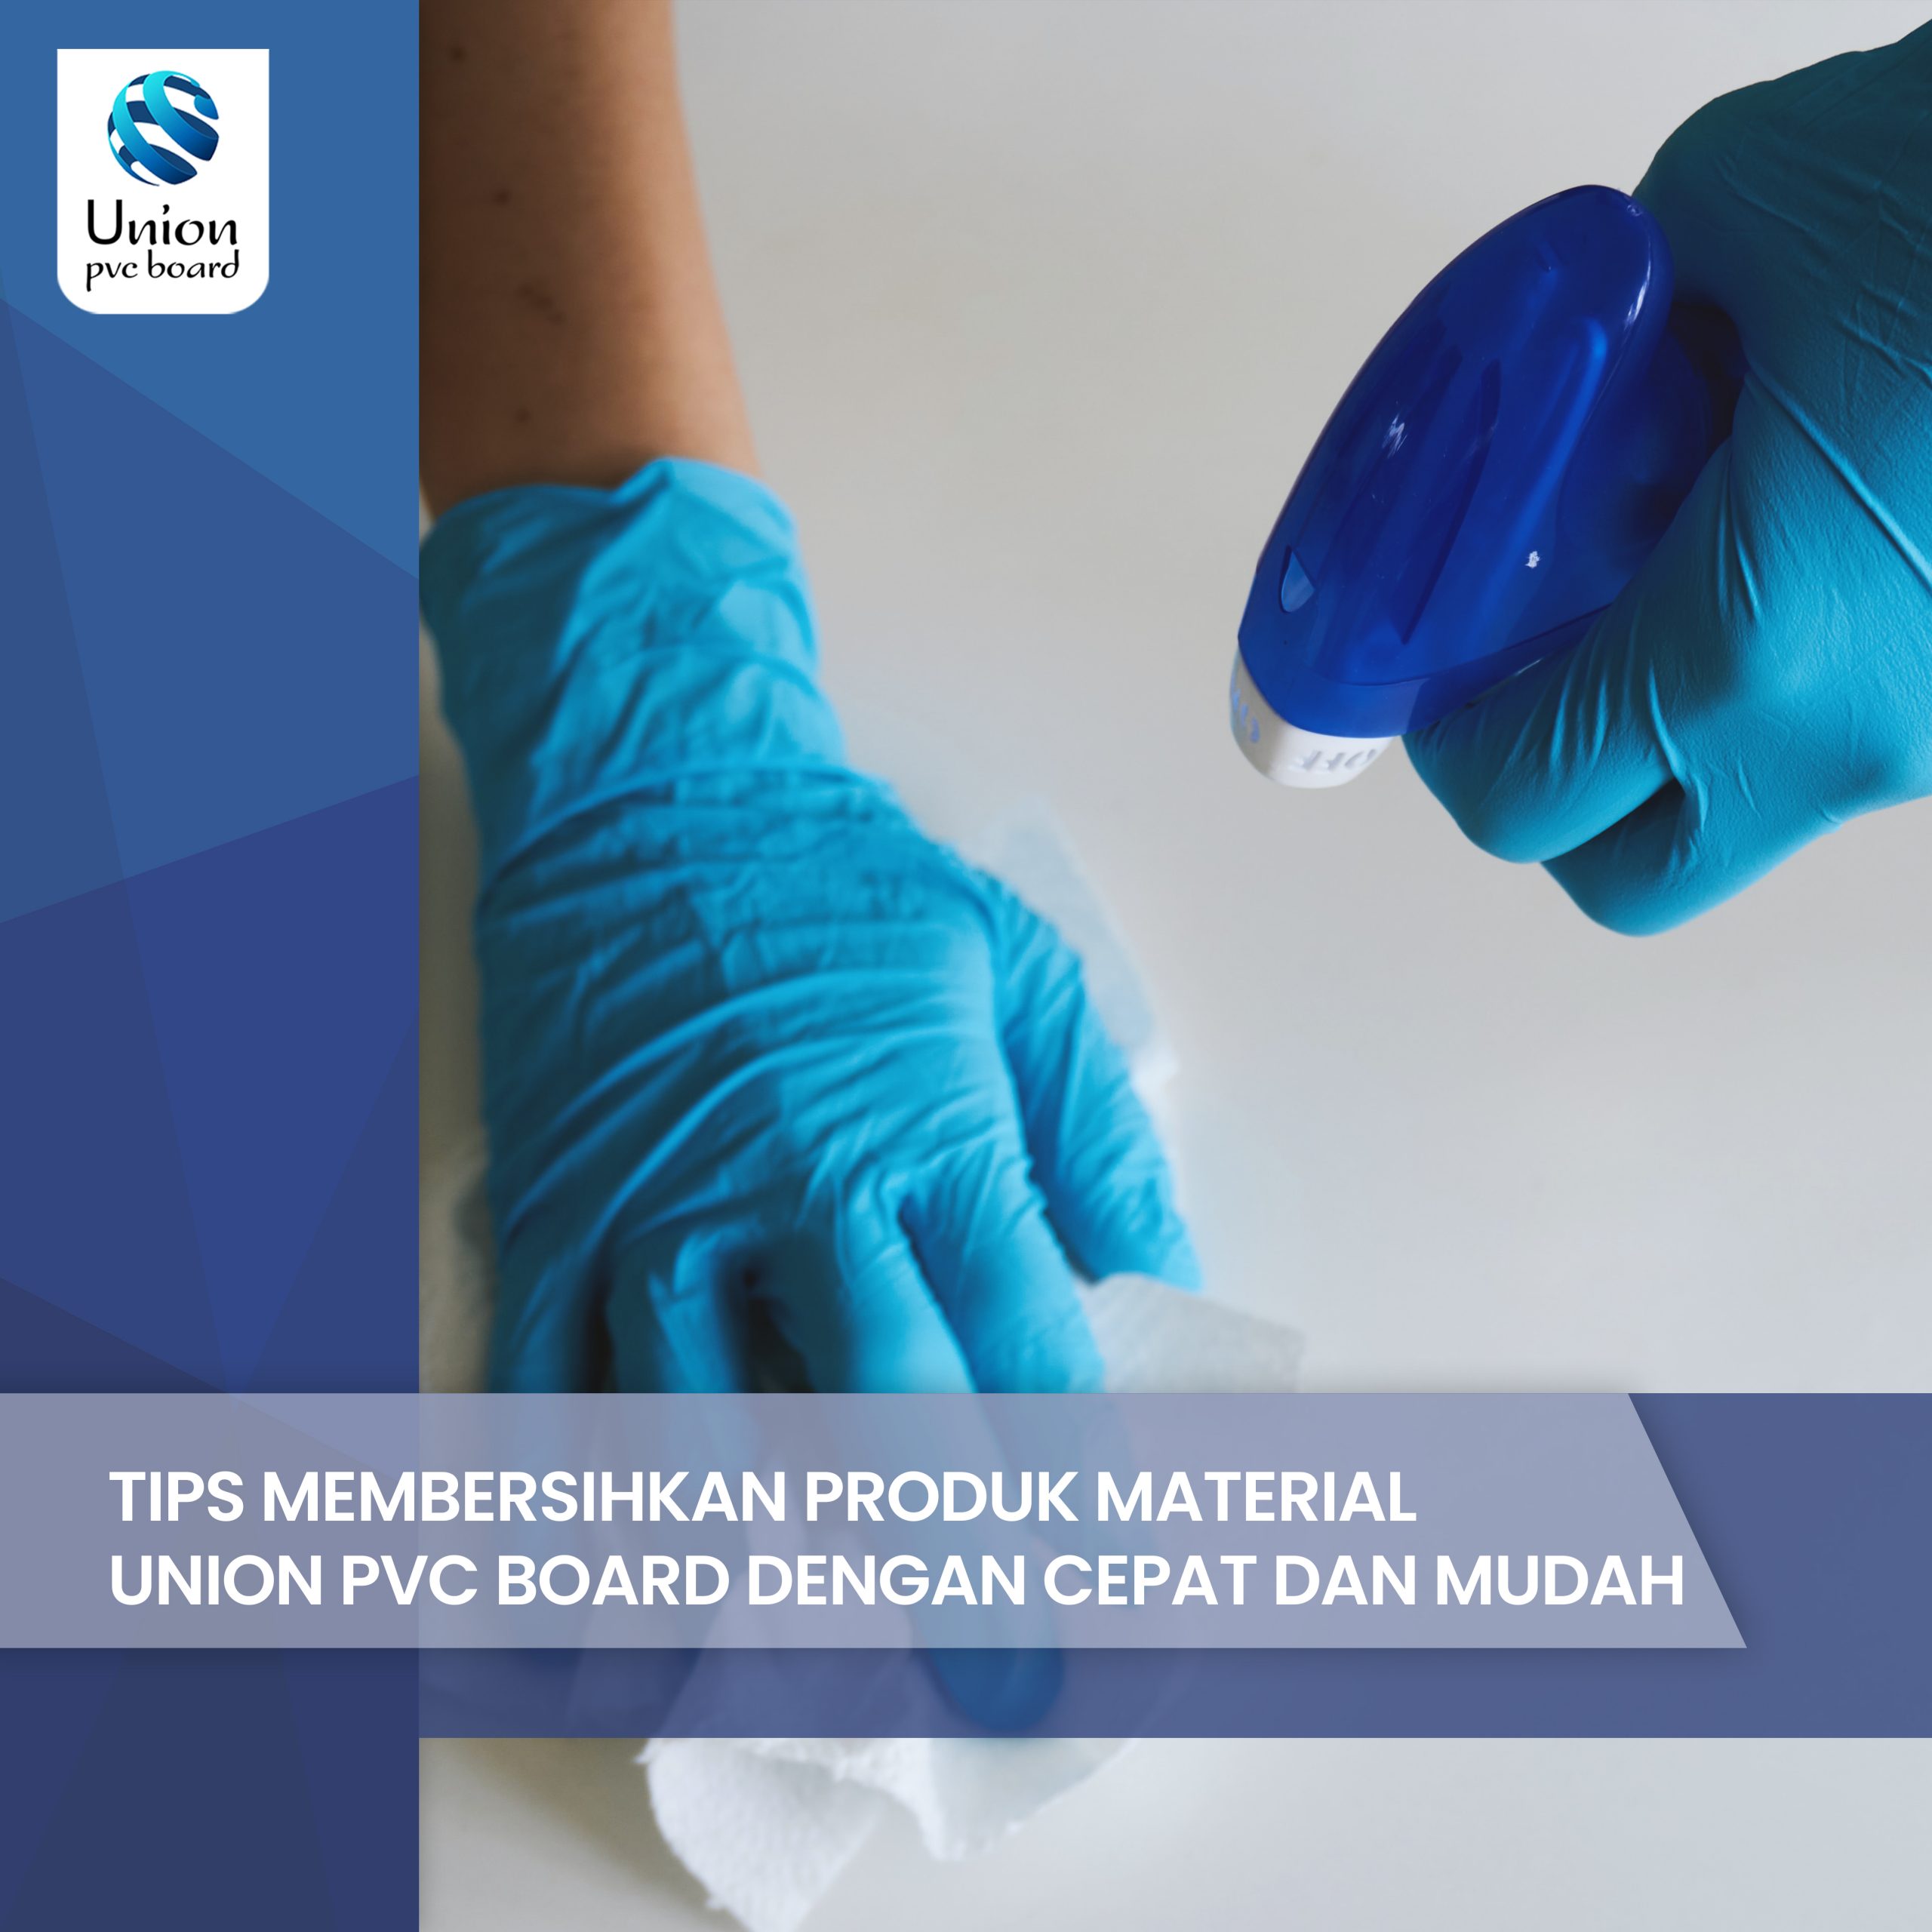 TIPS MEMBERSIHKAN PRODUK MATERIAL UNION PVC BOARD DENGAN CEPAT DAN MUDAH